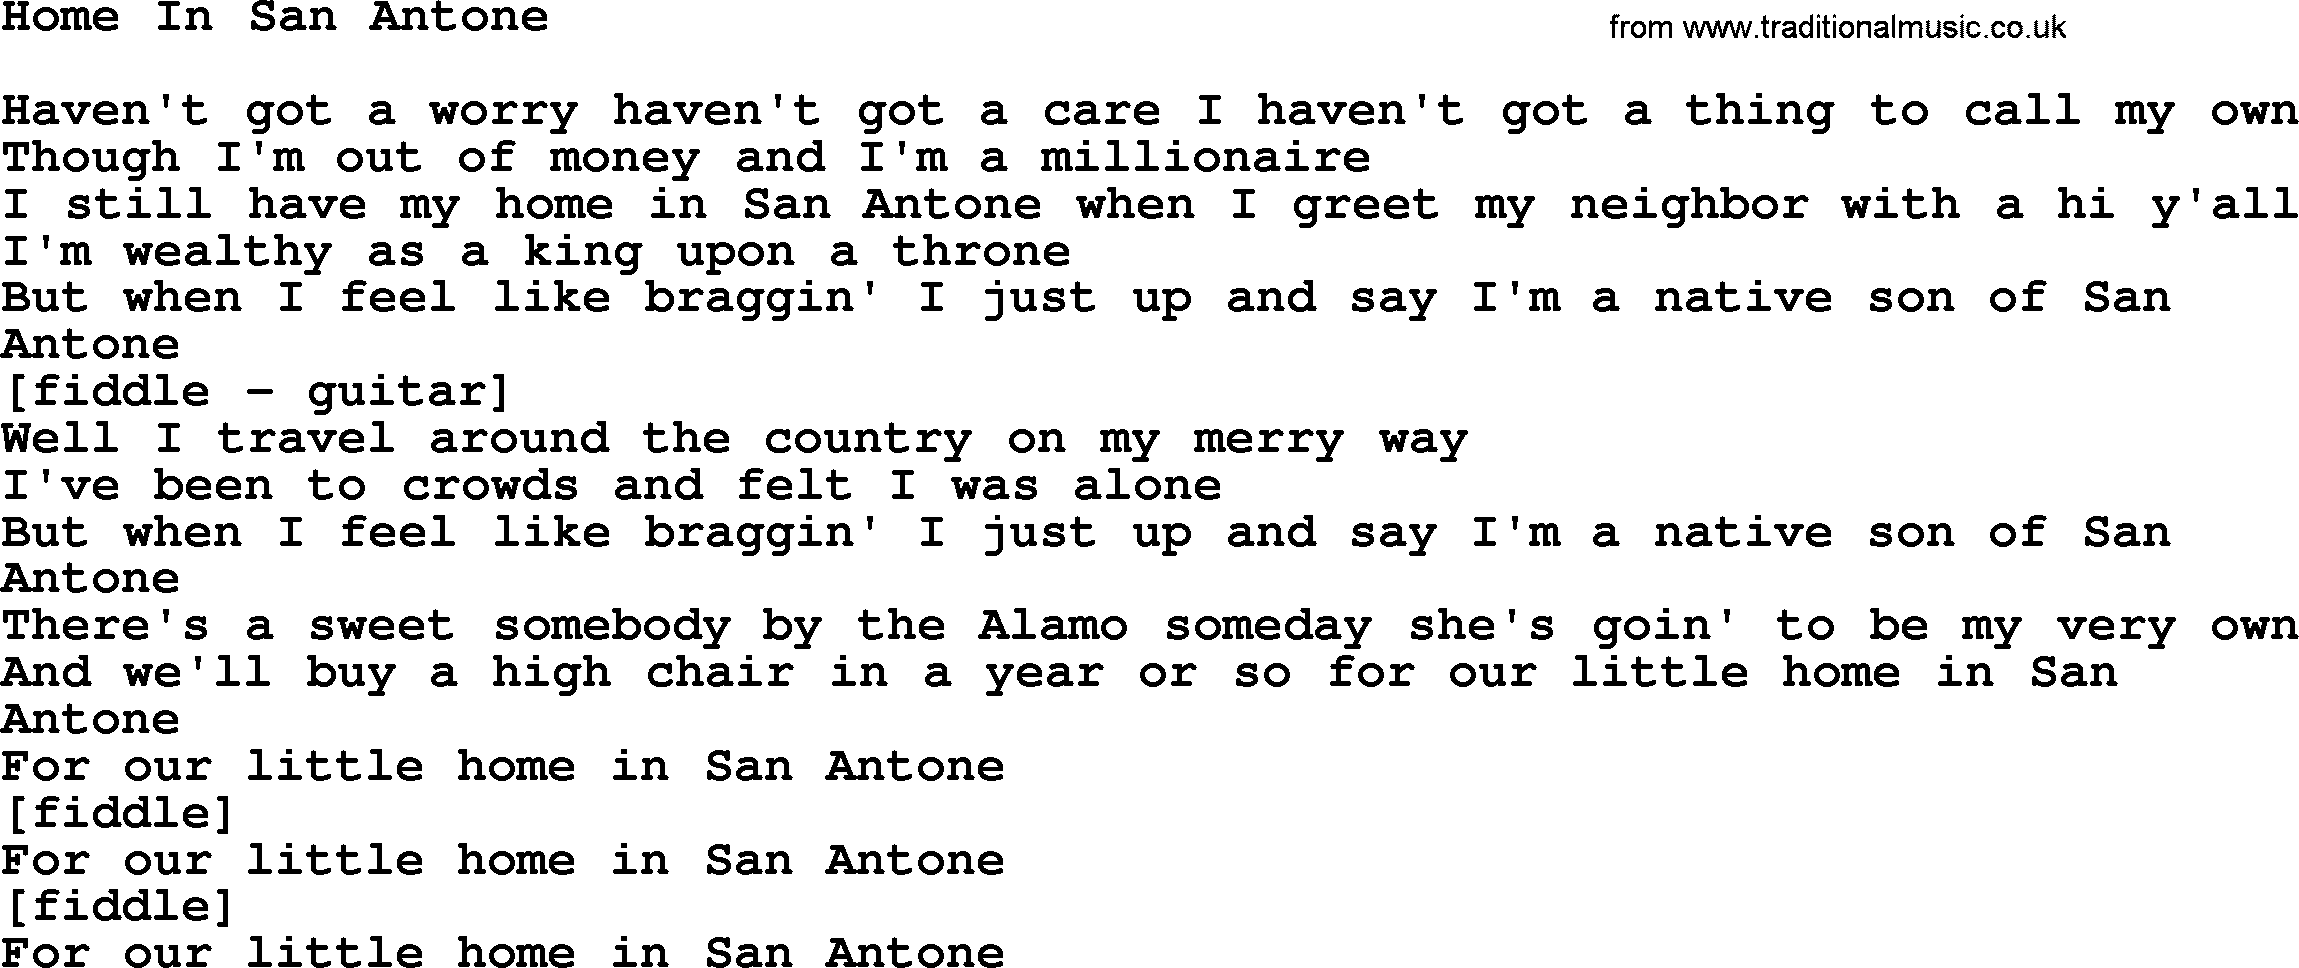 Willie Nelson song: Home In San Antone lyrics